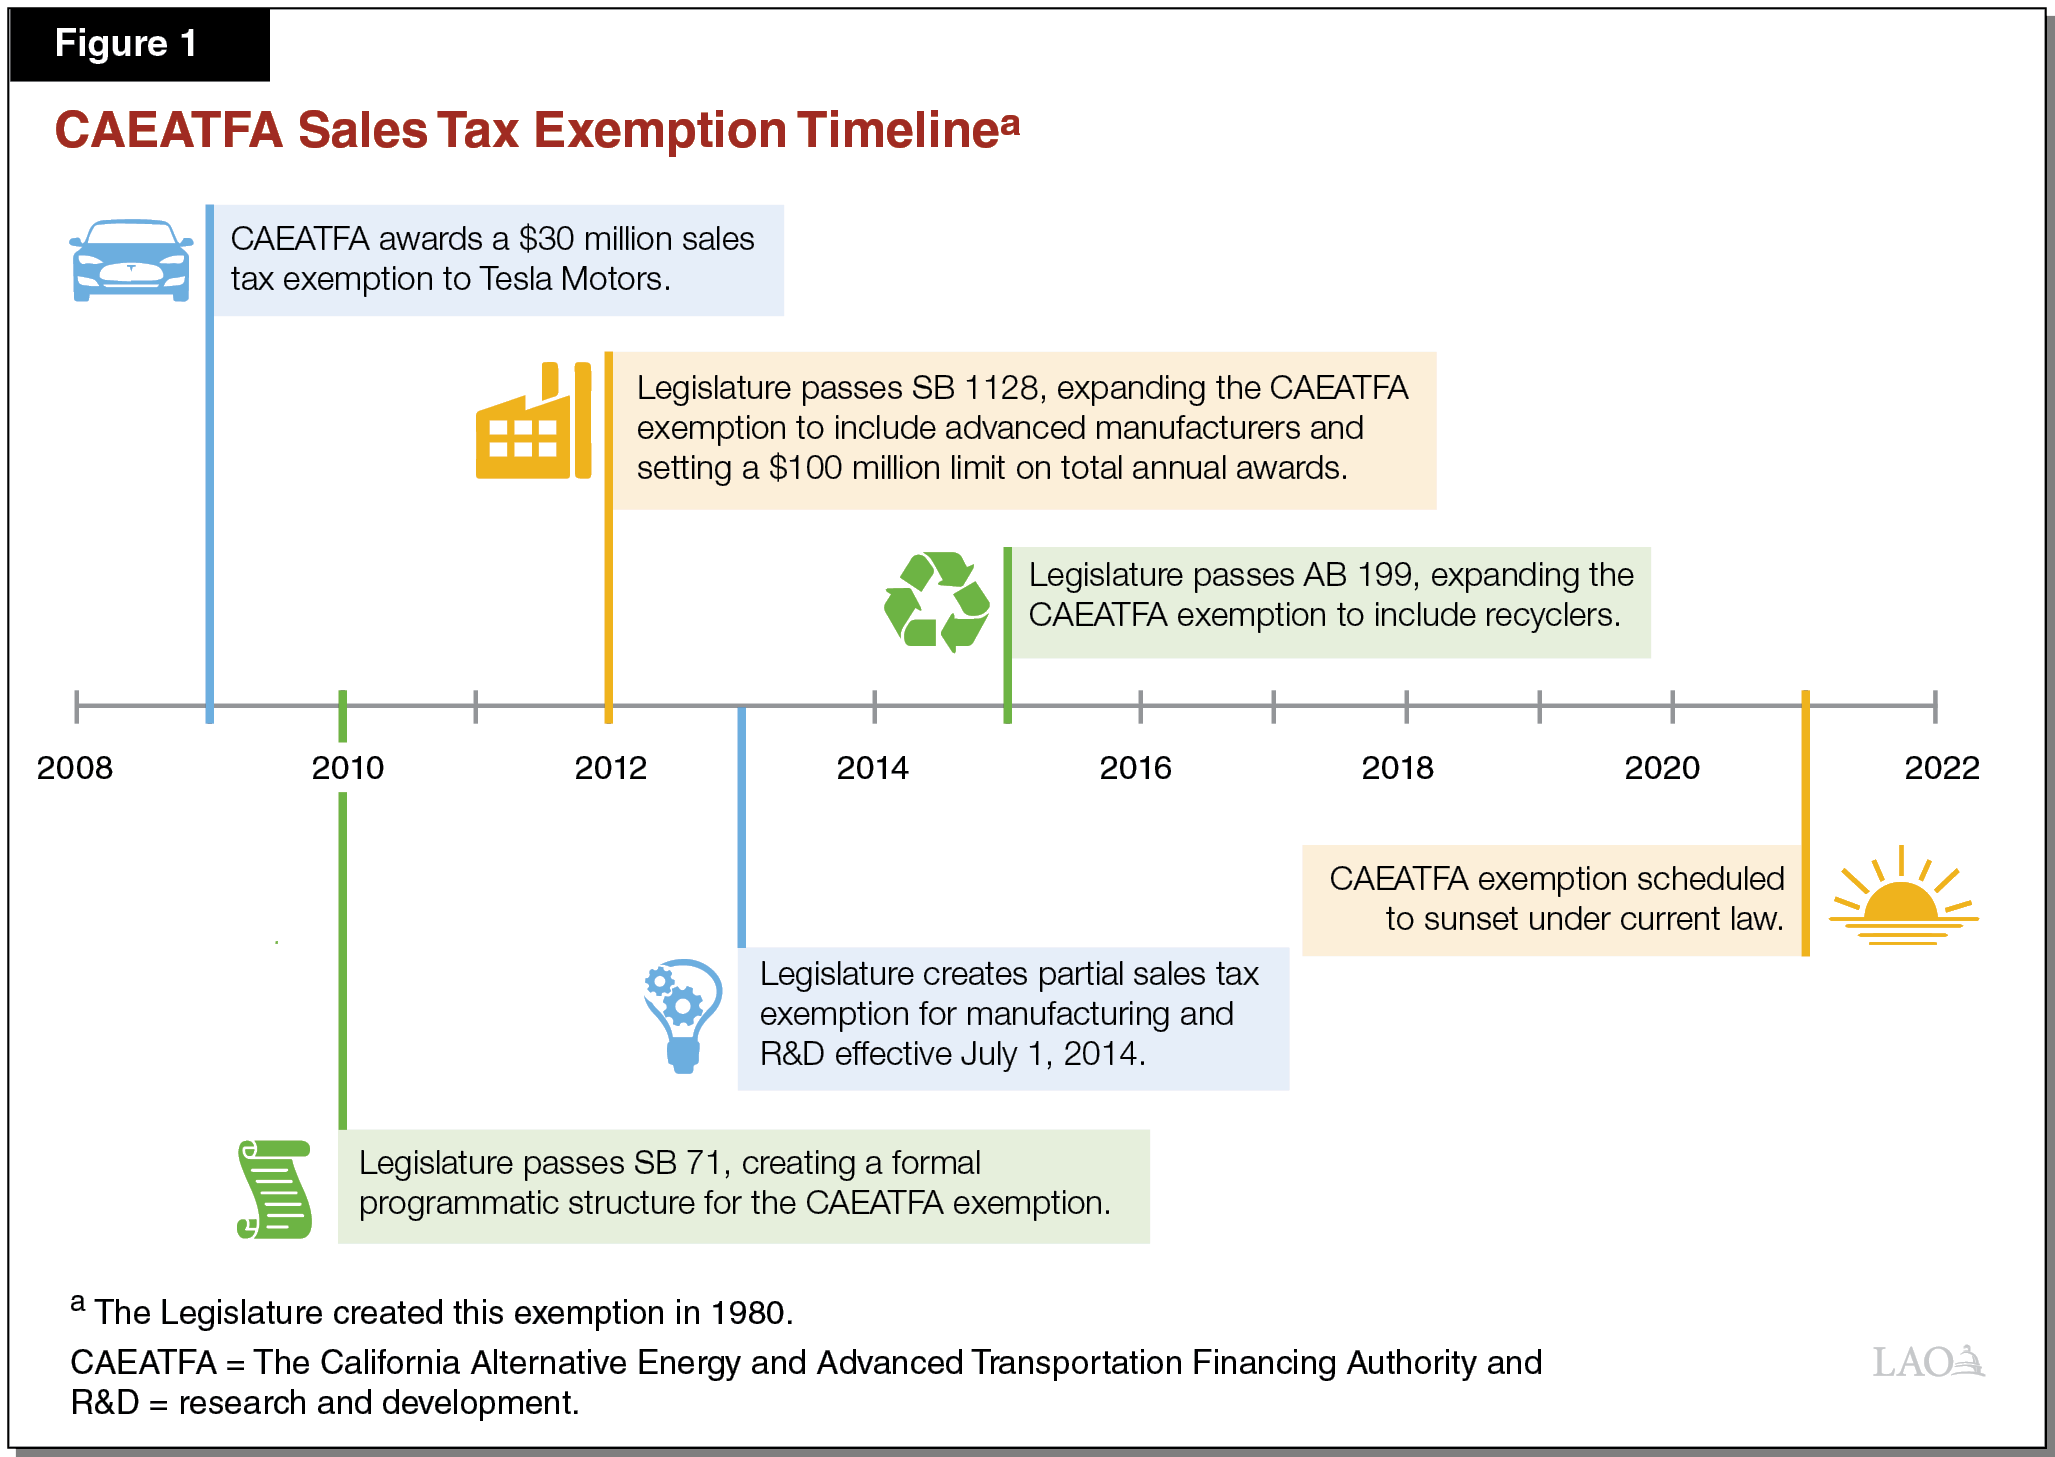 Figure 1 - CAEATFA Sales Tax Exemption Timeline